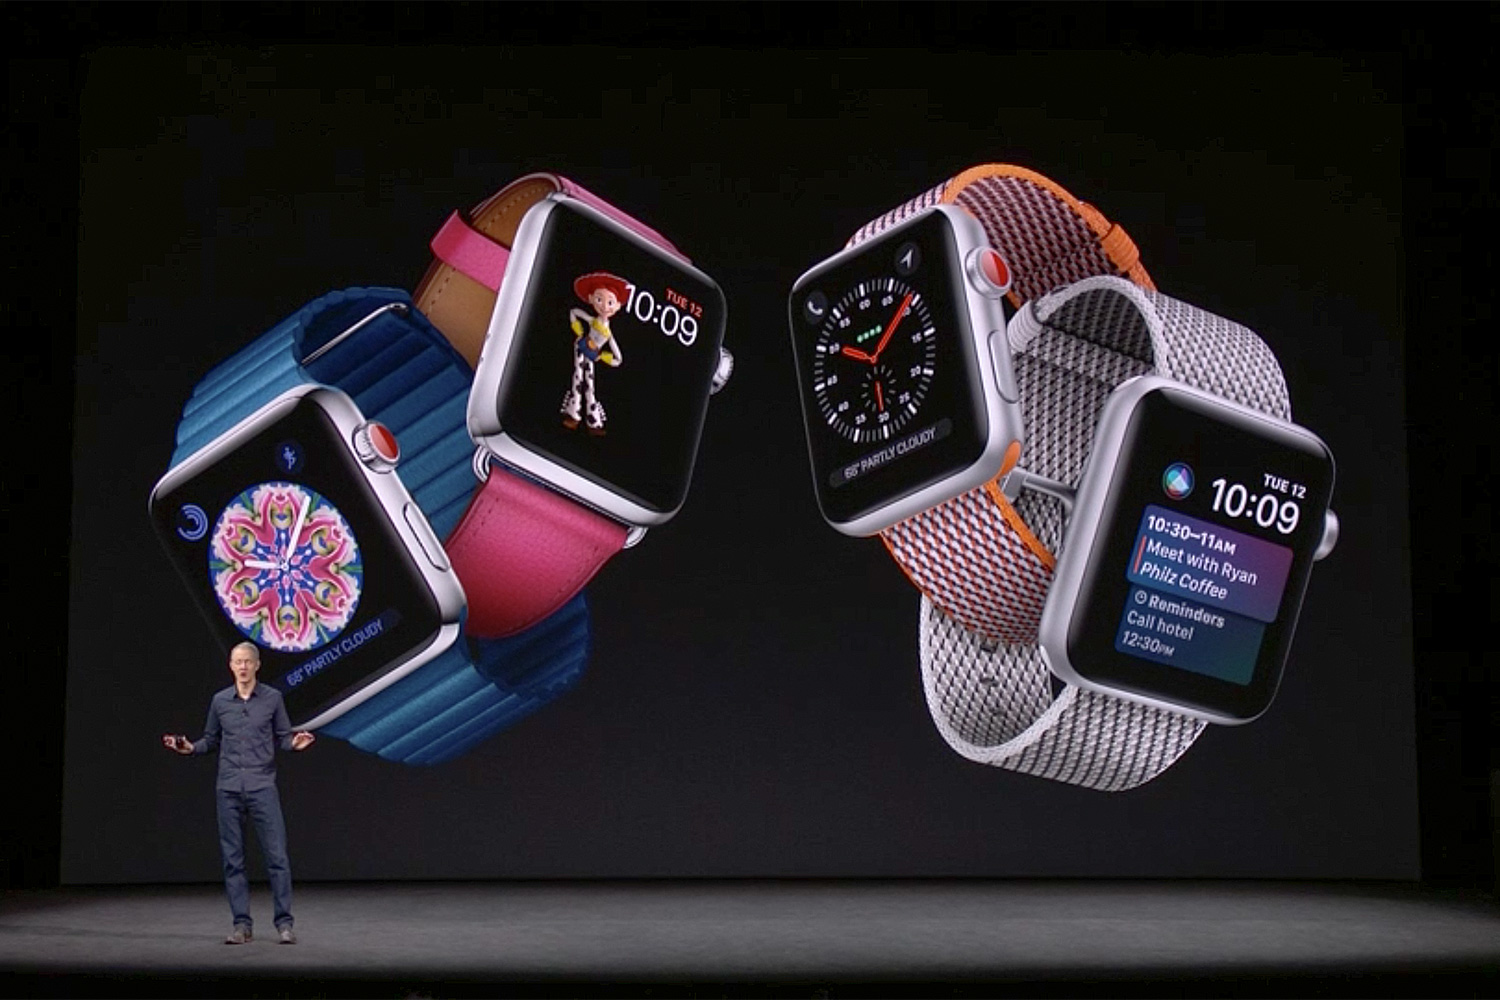 Apple Watch Series 3 announced